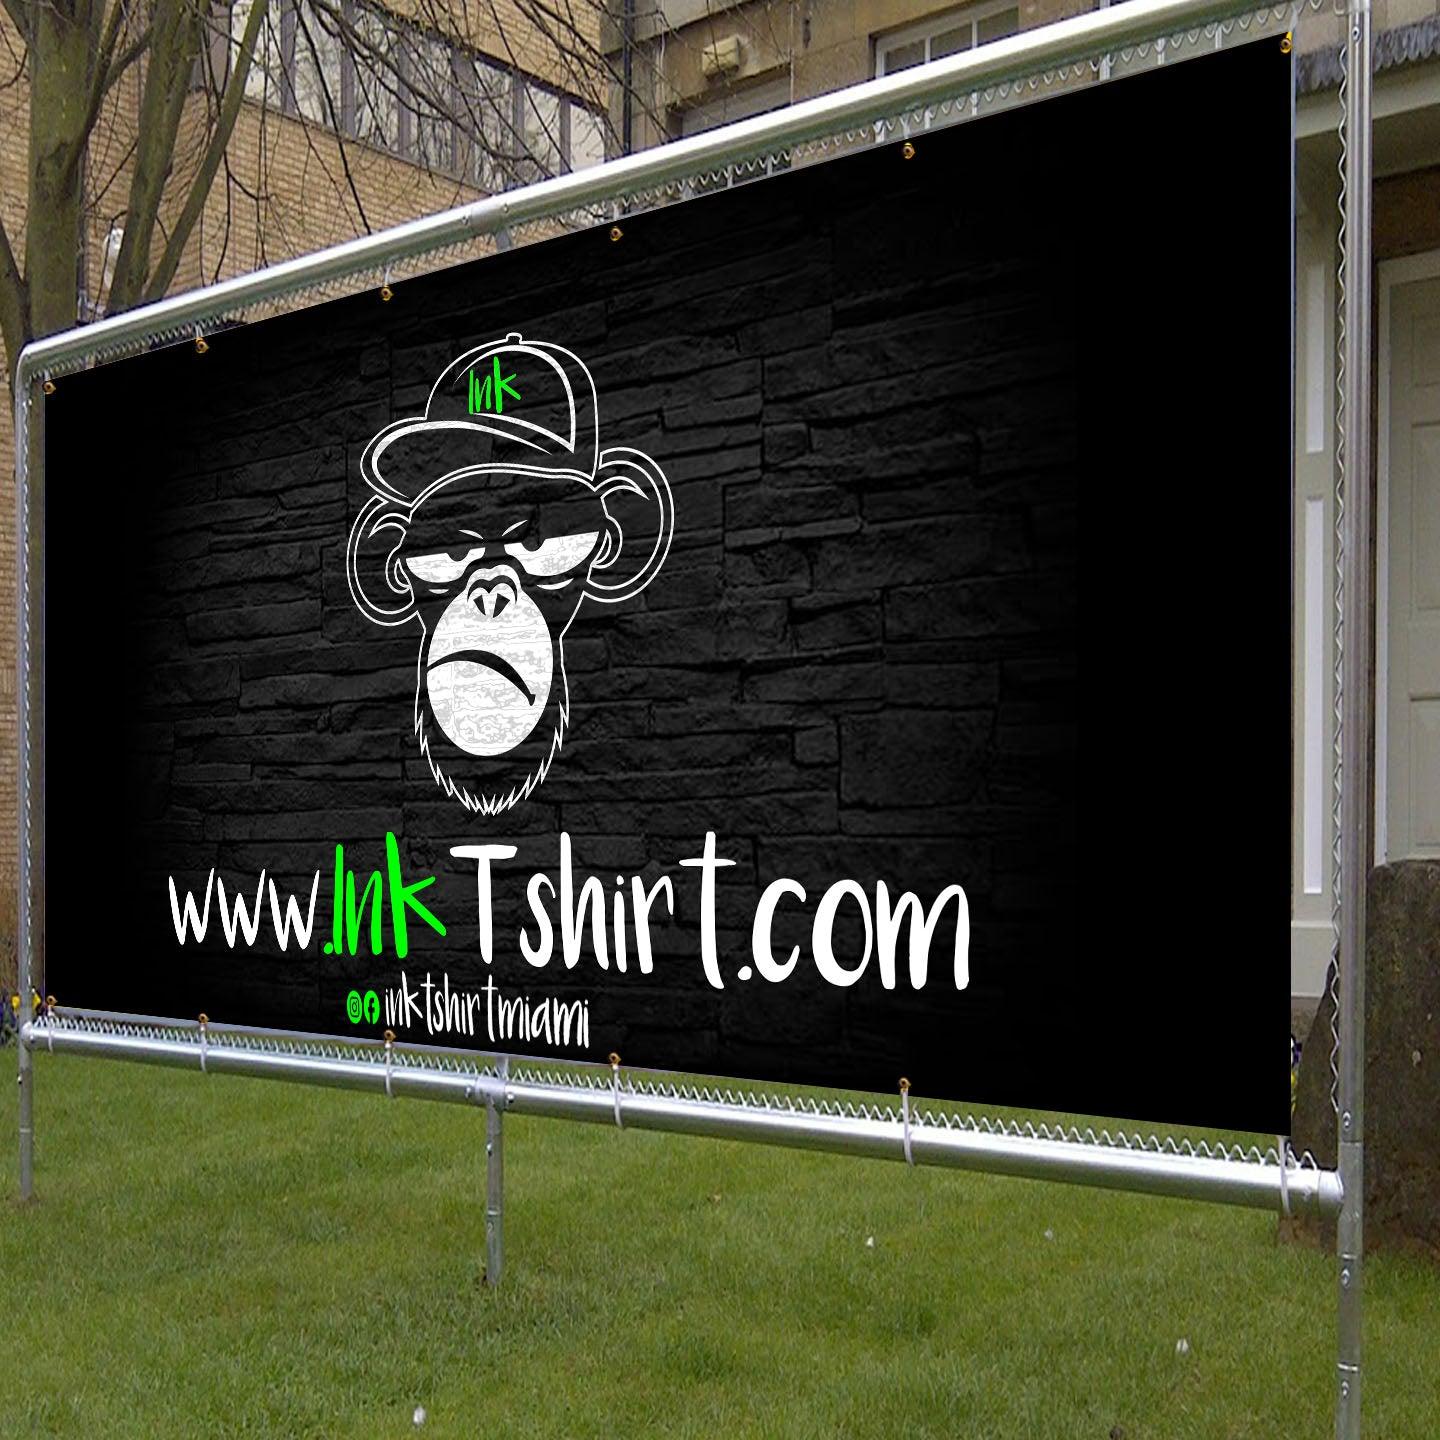 Buy Leoie Men 3D Monkey Pattern Digital Printing Short Sleeve T-Shirt as  Shown L at